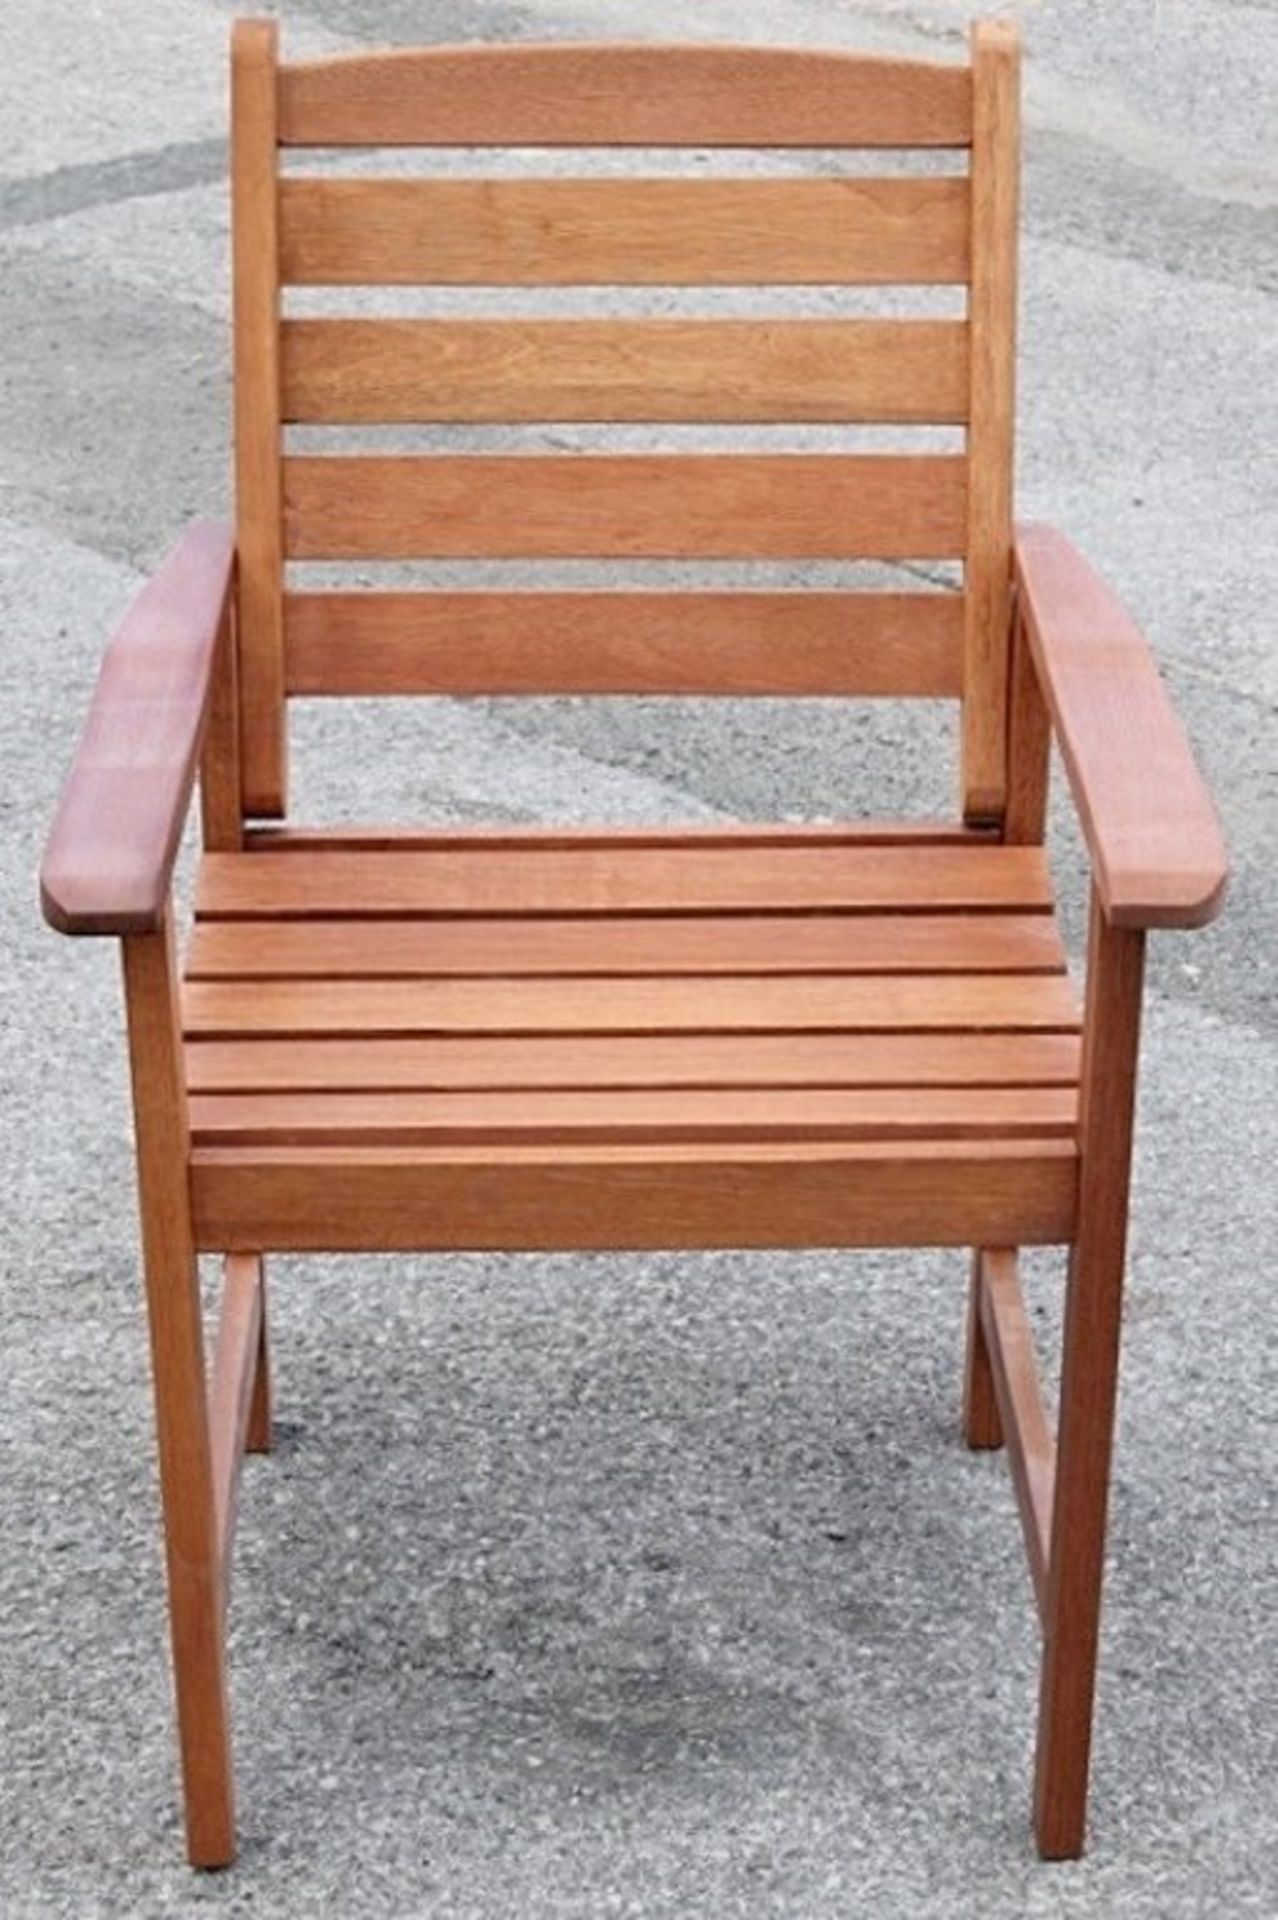 1 x 5-Piece "Macau Nassau" Garden Furniture Set - Includes Bench, Extending Table & 3 x Arm Chairs - - Image 6 of 9